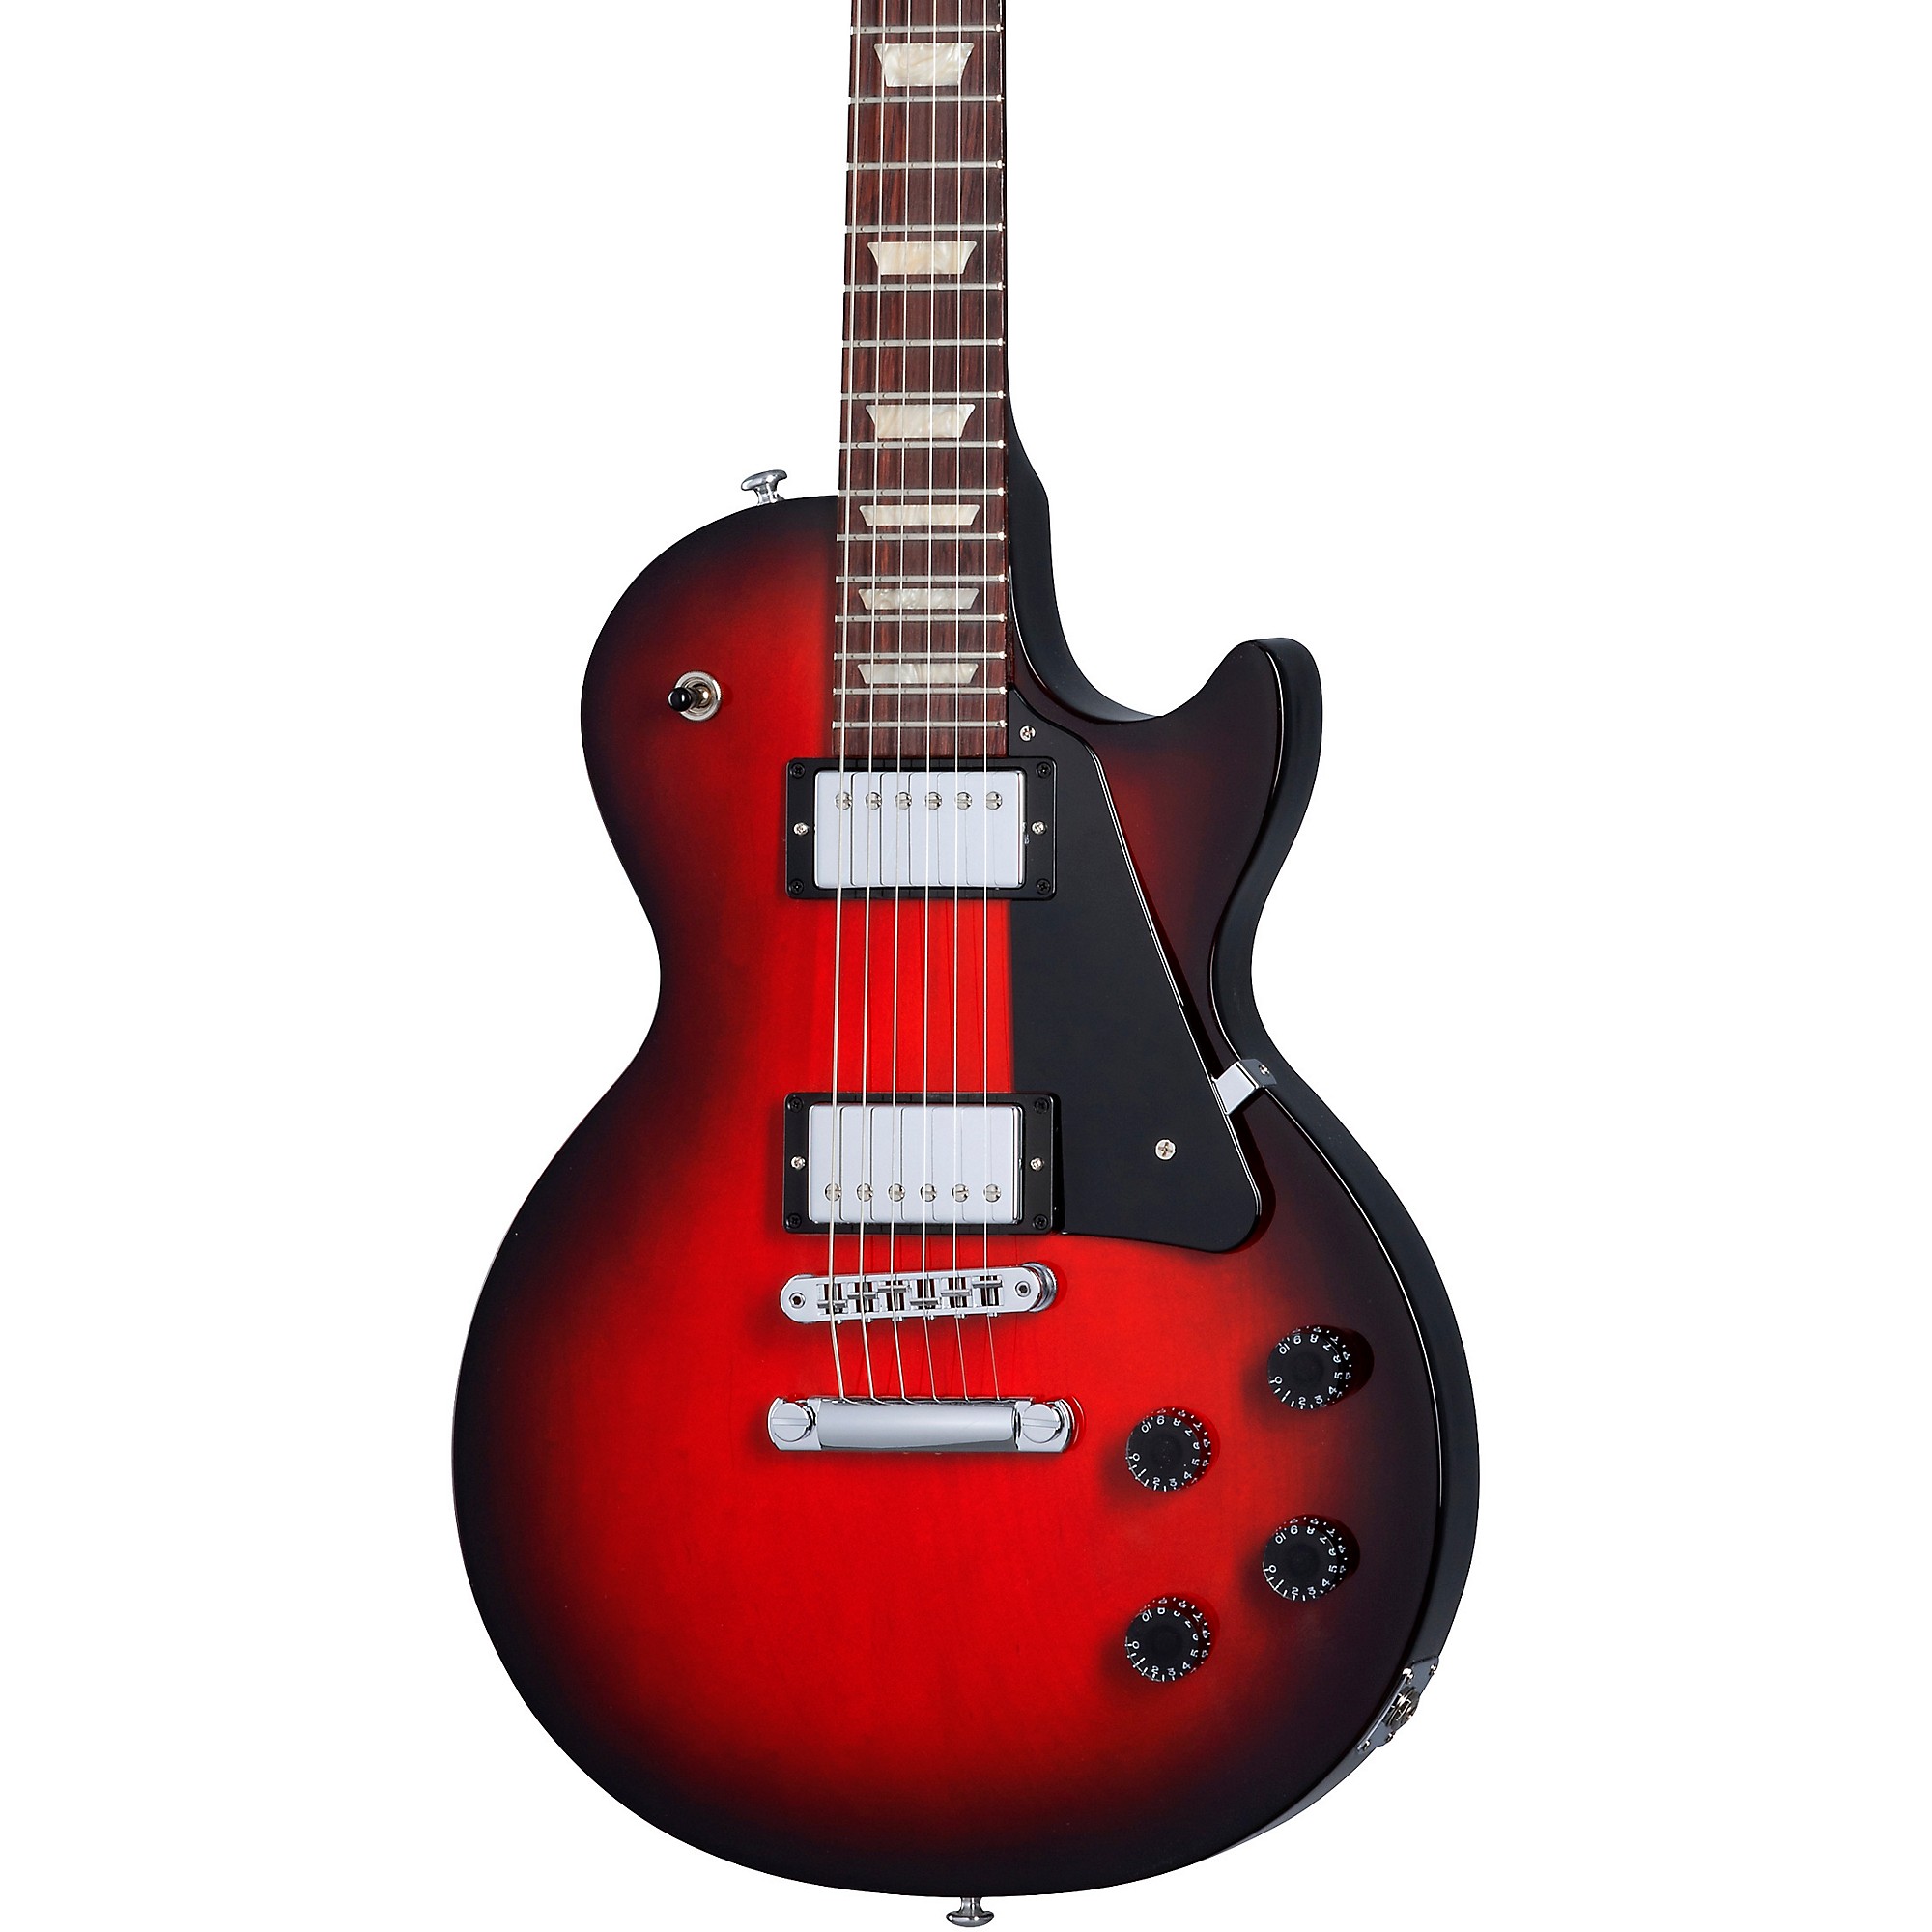 Gibson Les Paul Studio Limited-Edition Electric Guitar Black Cherry Burst |  Guitar Center